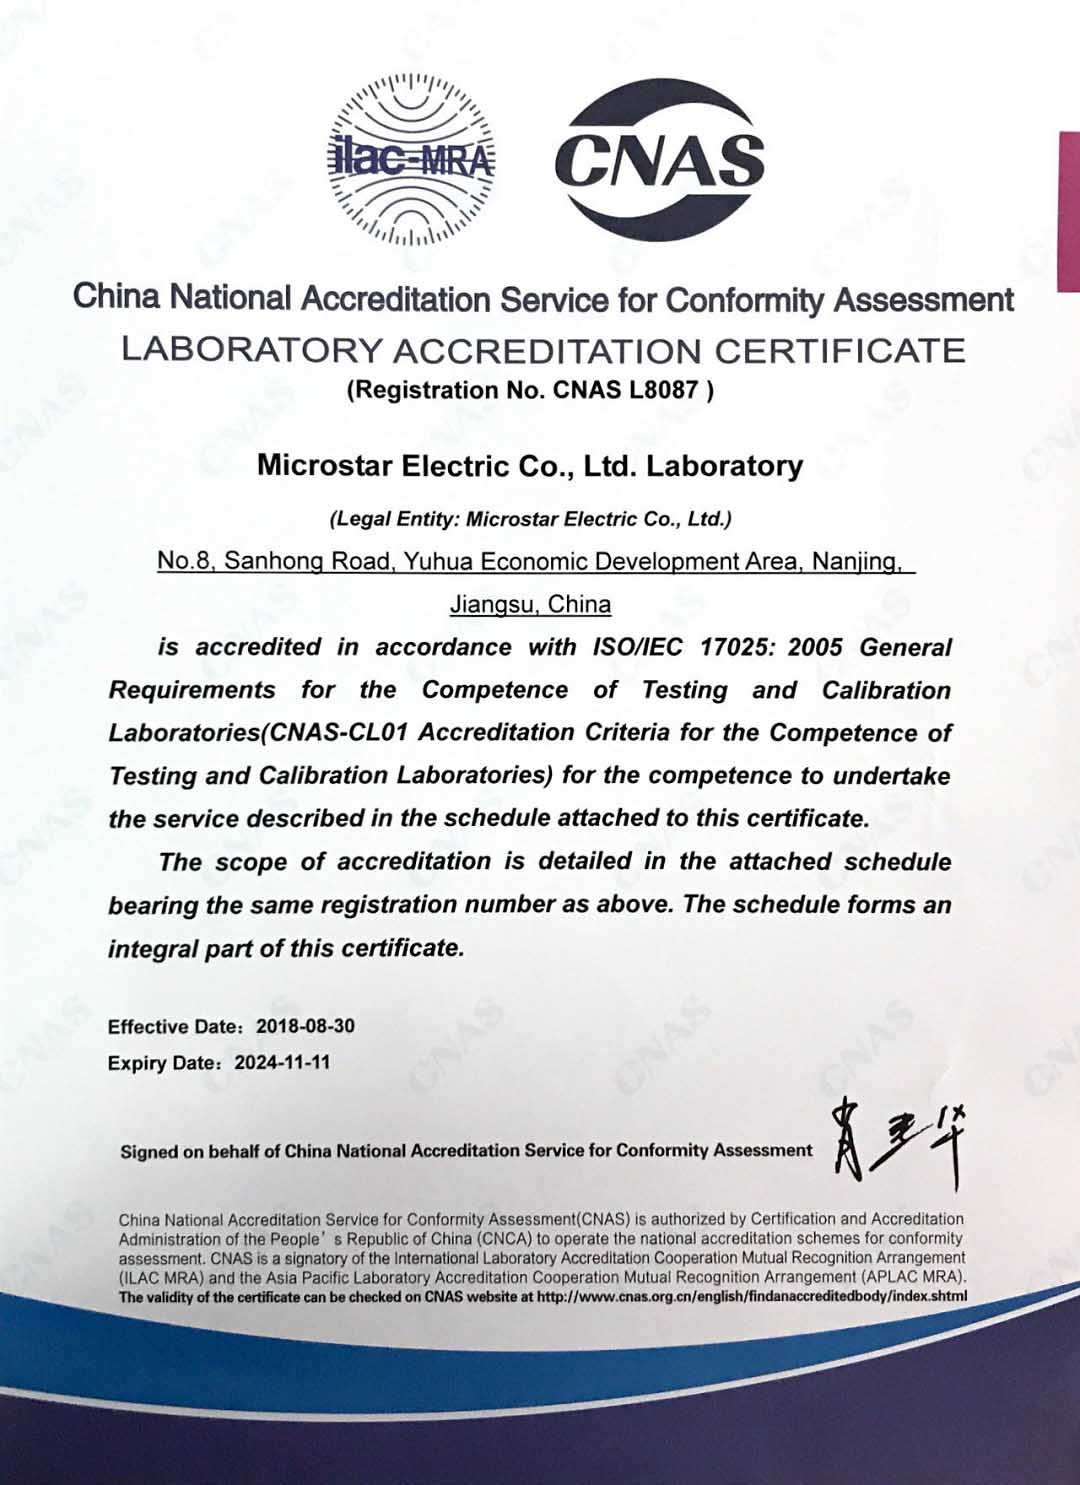 IEC17025 Lab Accreditation (CNAS) Certificate